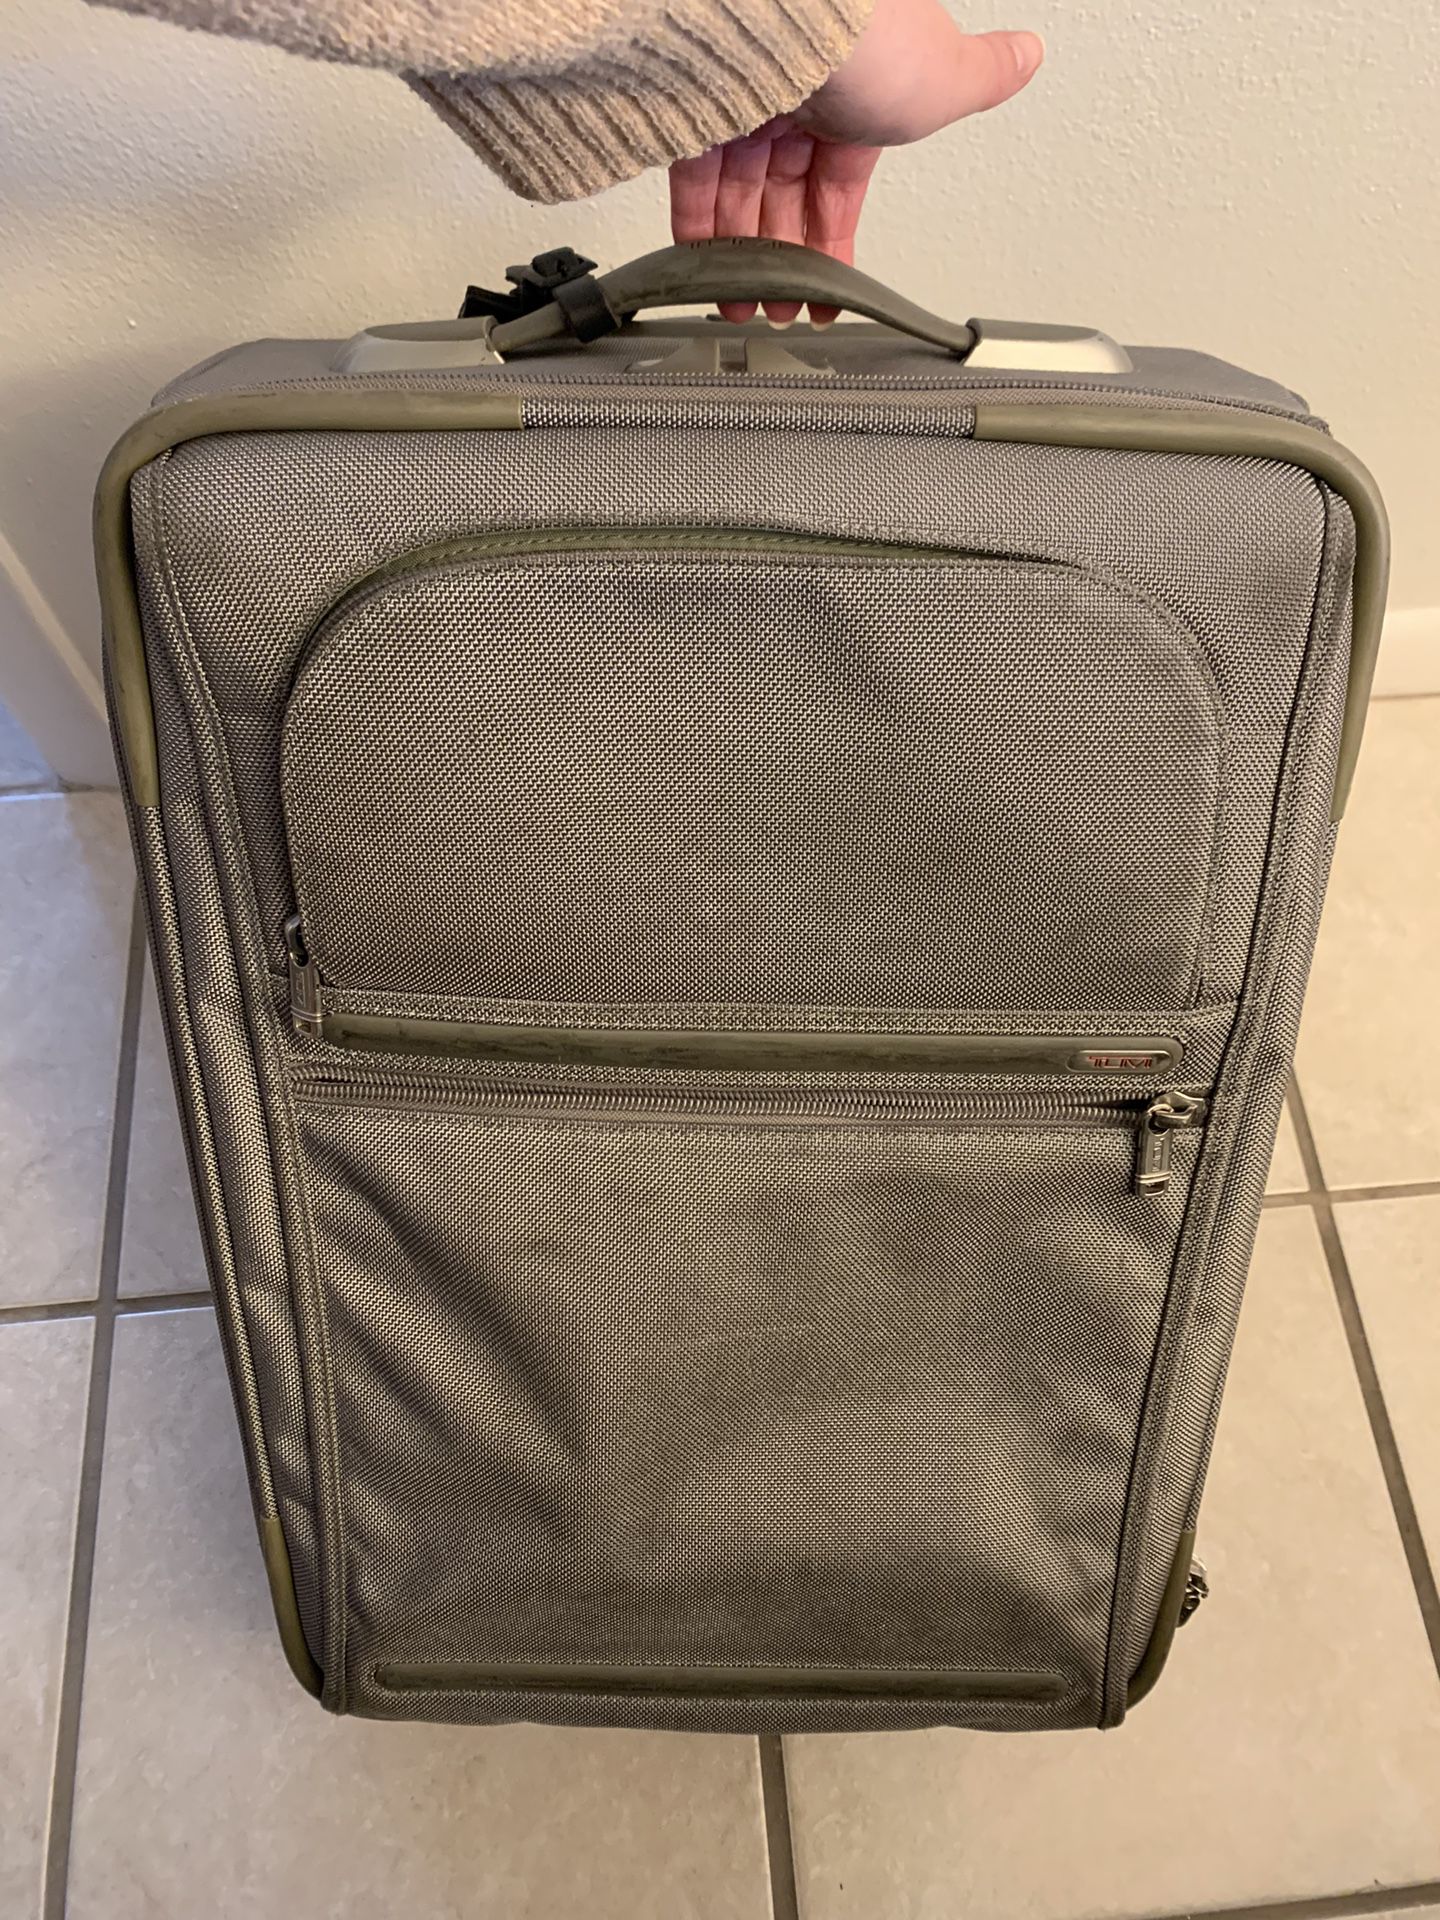 Tumi Carry On luggage 